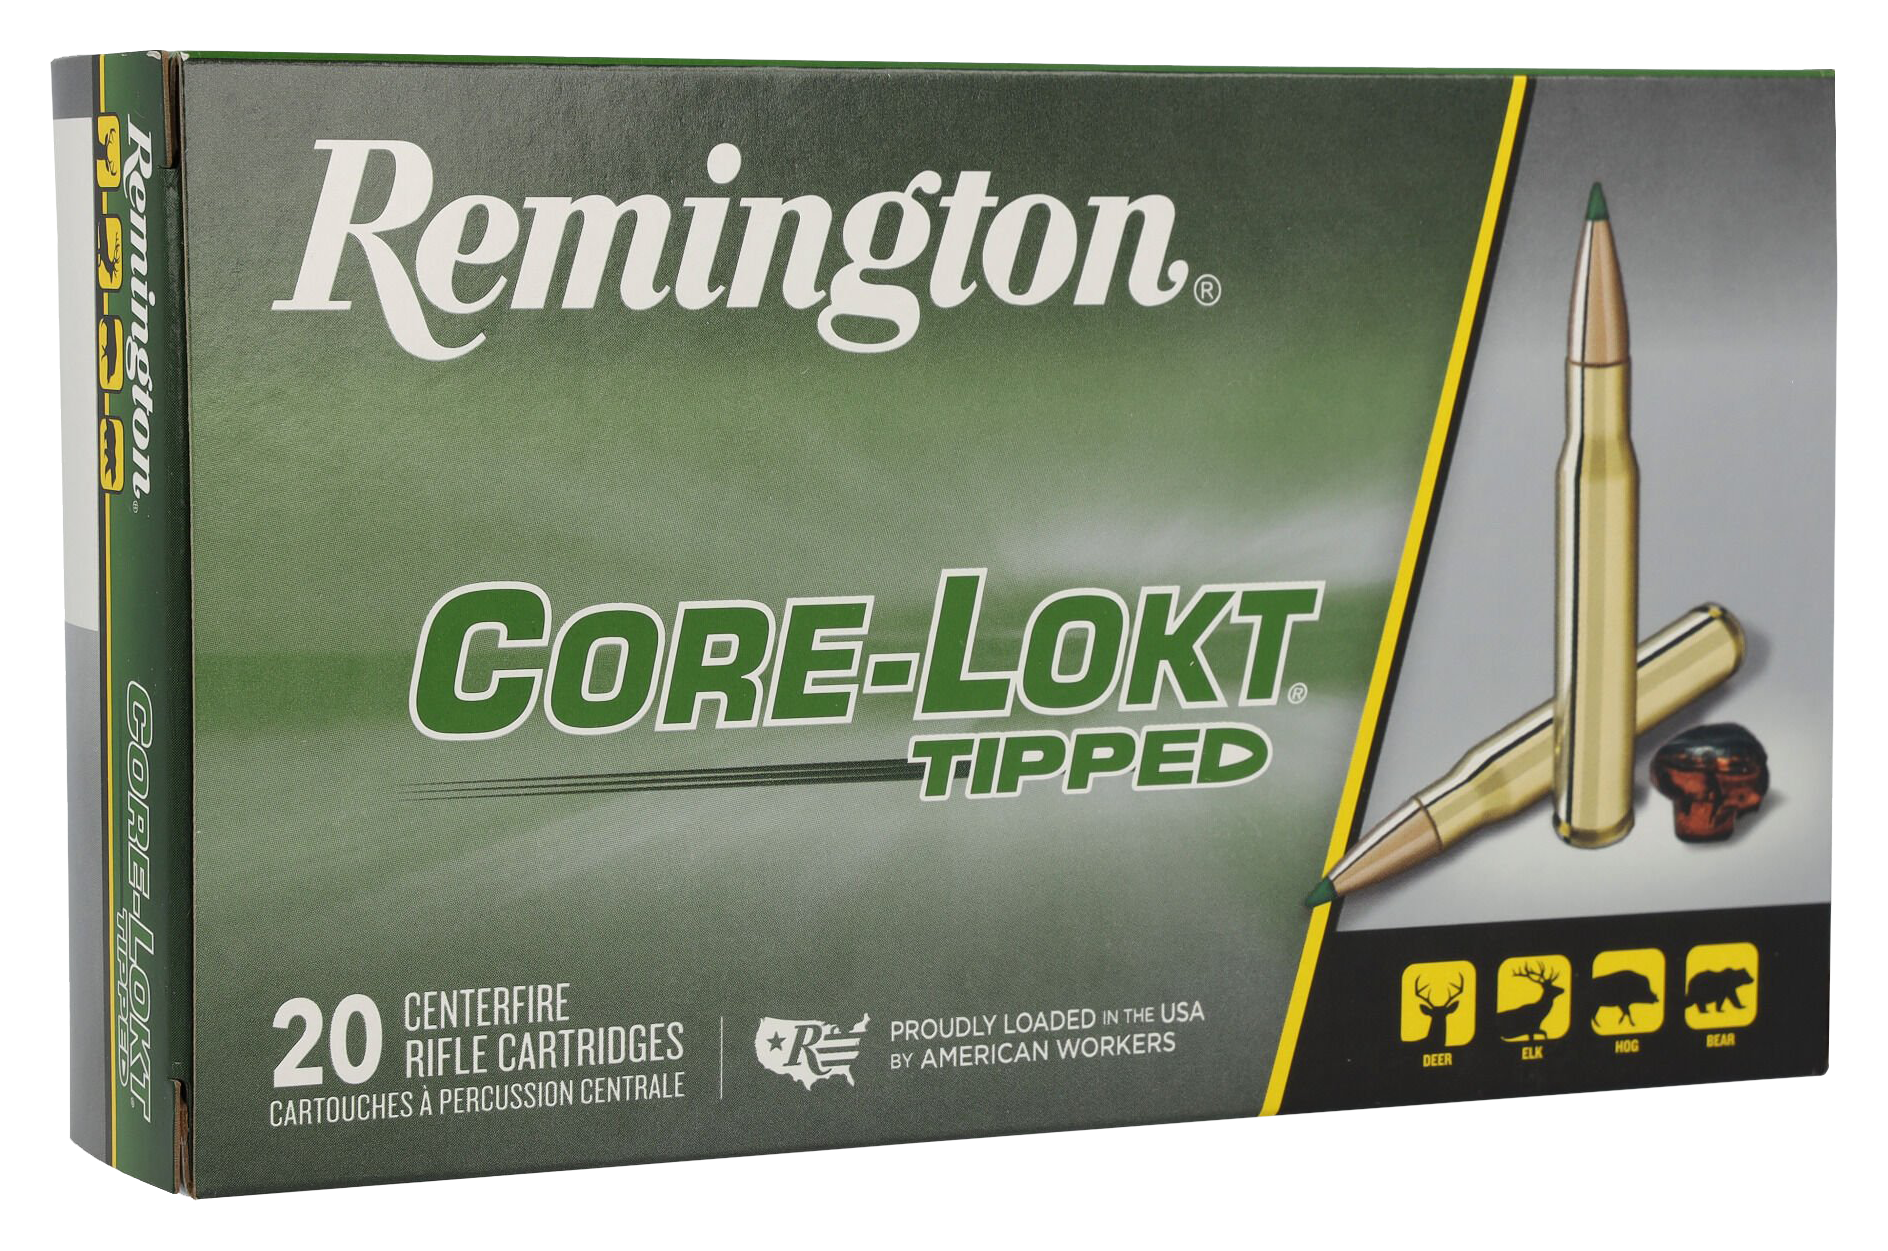 Remington Core-Lokt Tipped Centerfire Rifle Ammo - 6.5 Creedmoor - 129 Grain - 20 Rounds